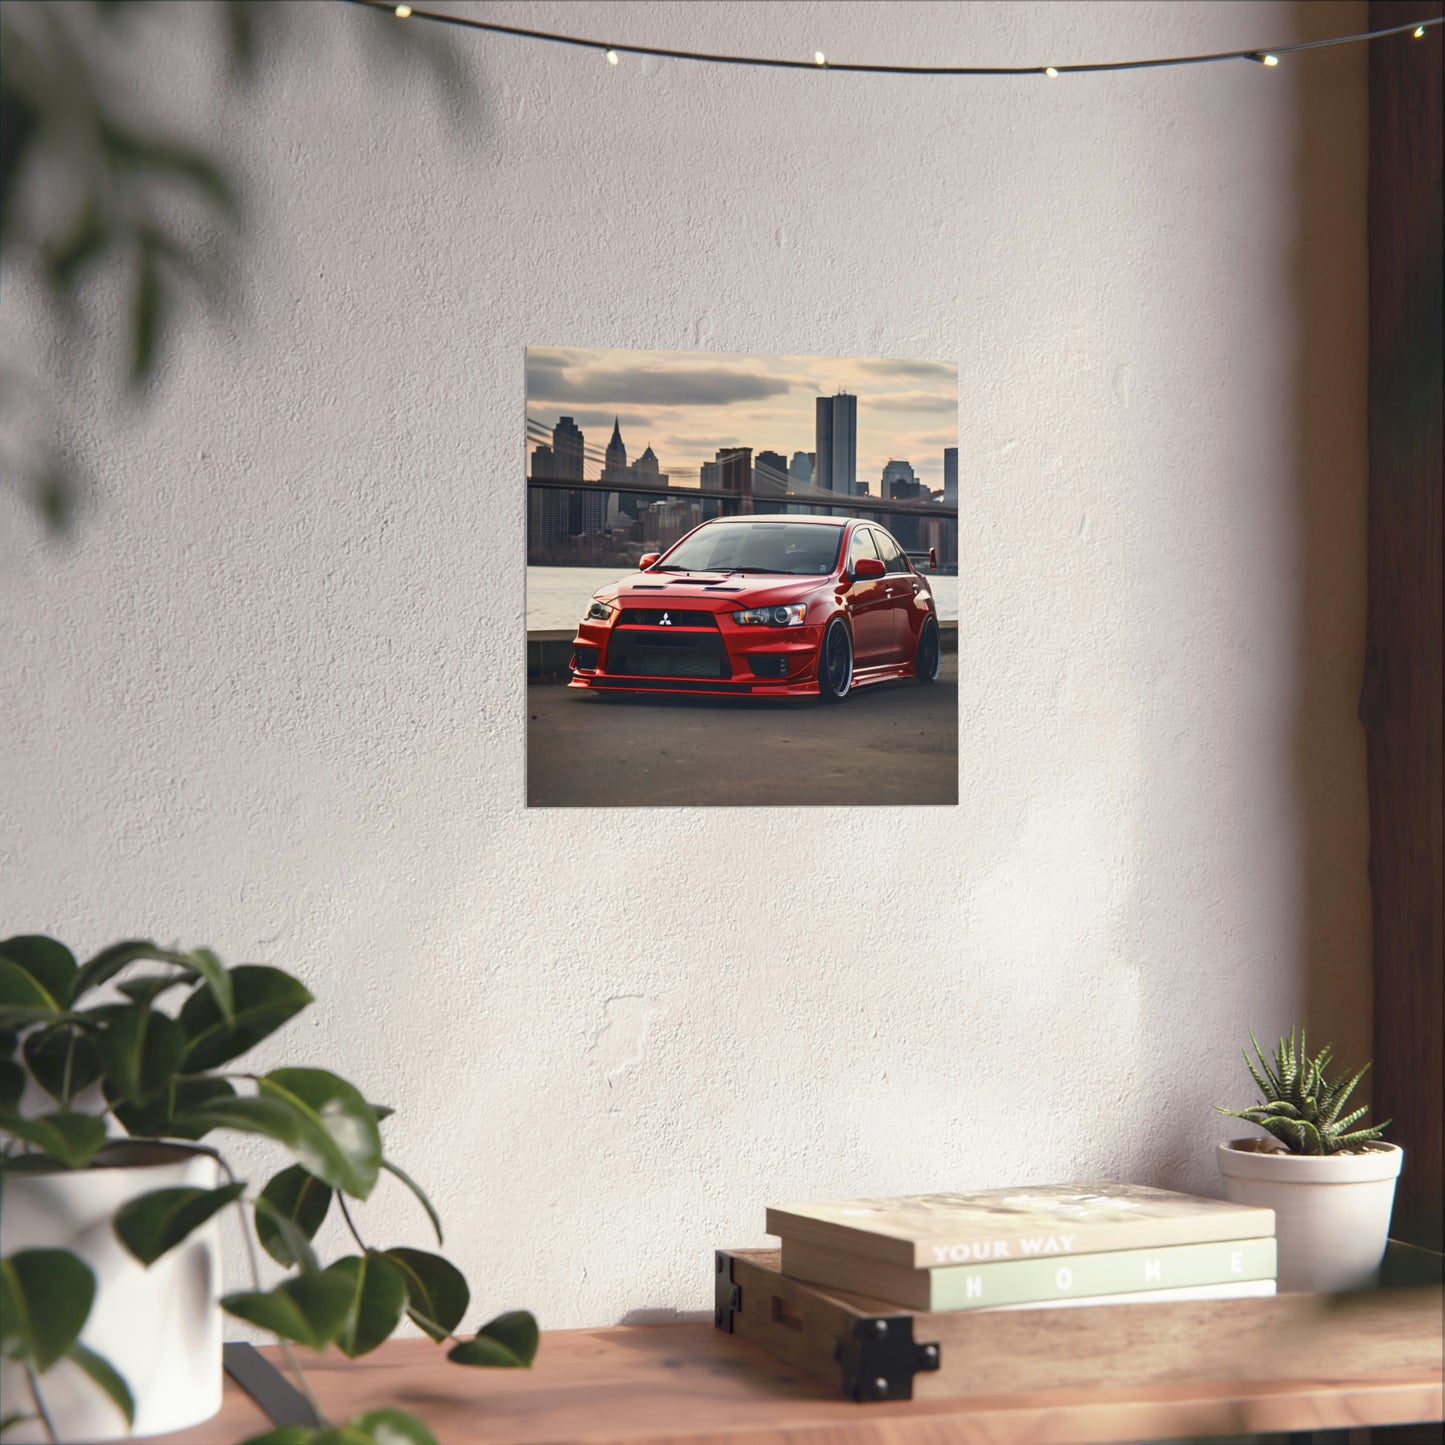 Stance Lancer Evo Luxury Dream Car Wall Art Matte Poster Print